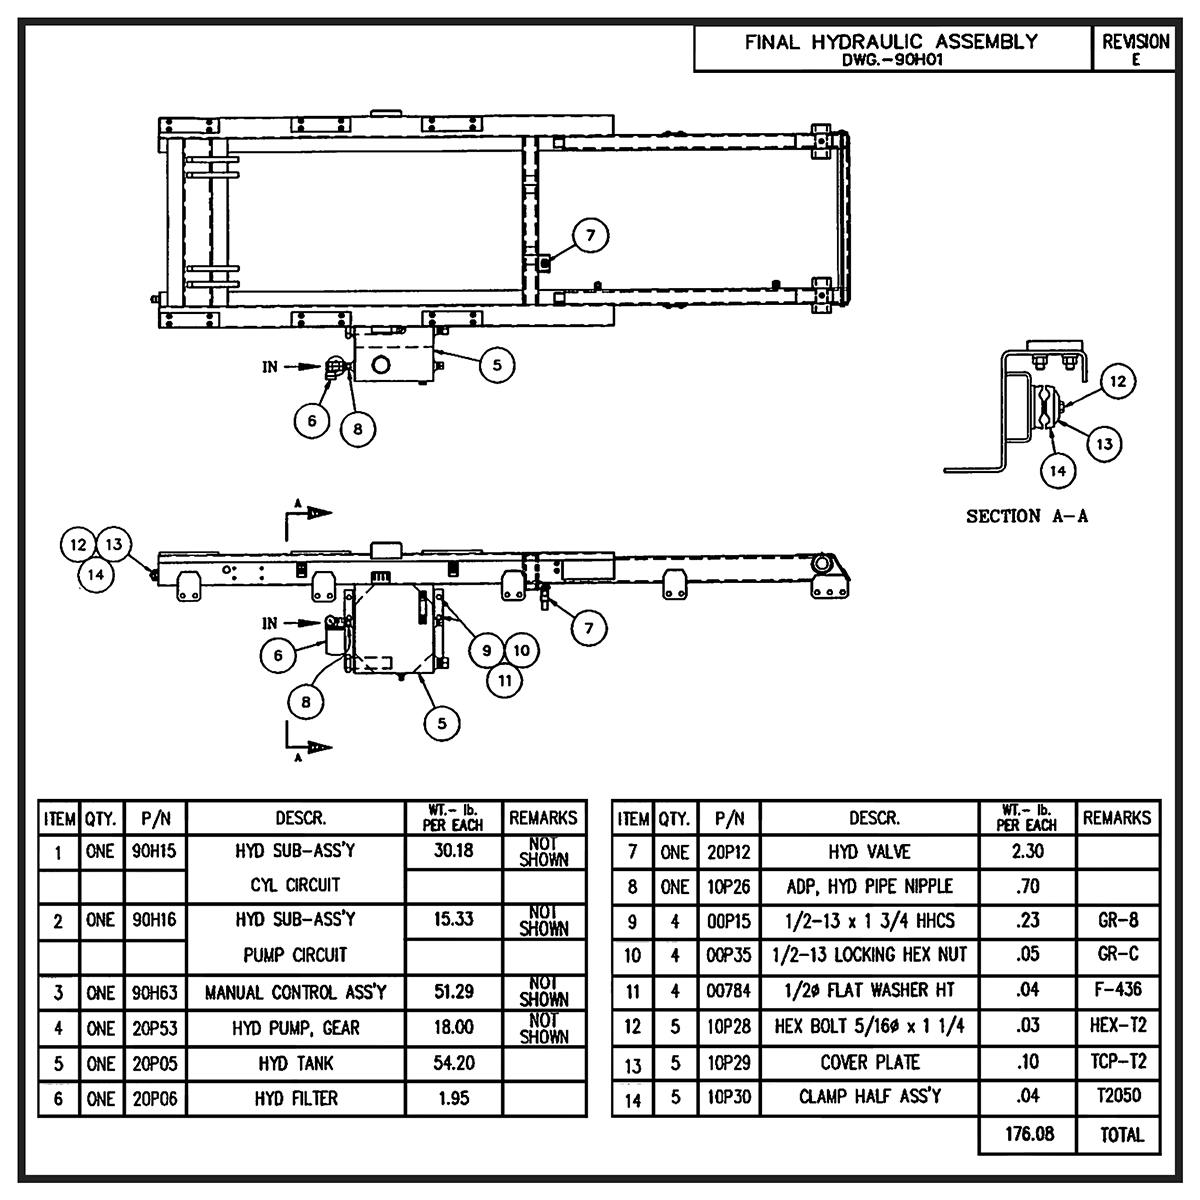 Swaploader SL-125 Final Hydraulic Assembly Diagram